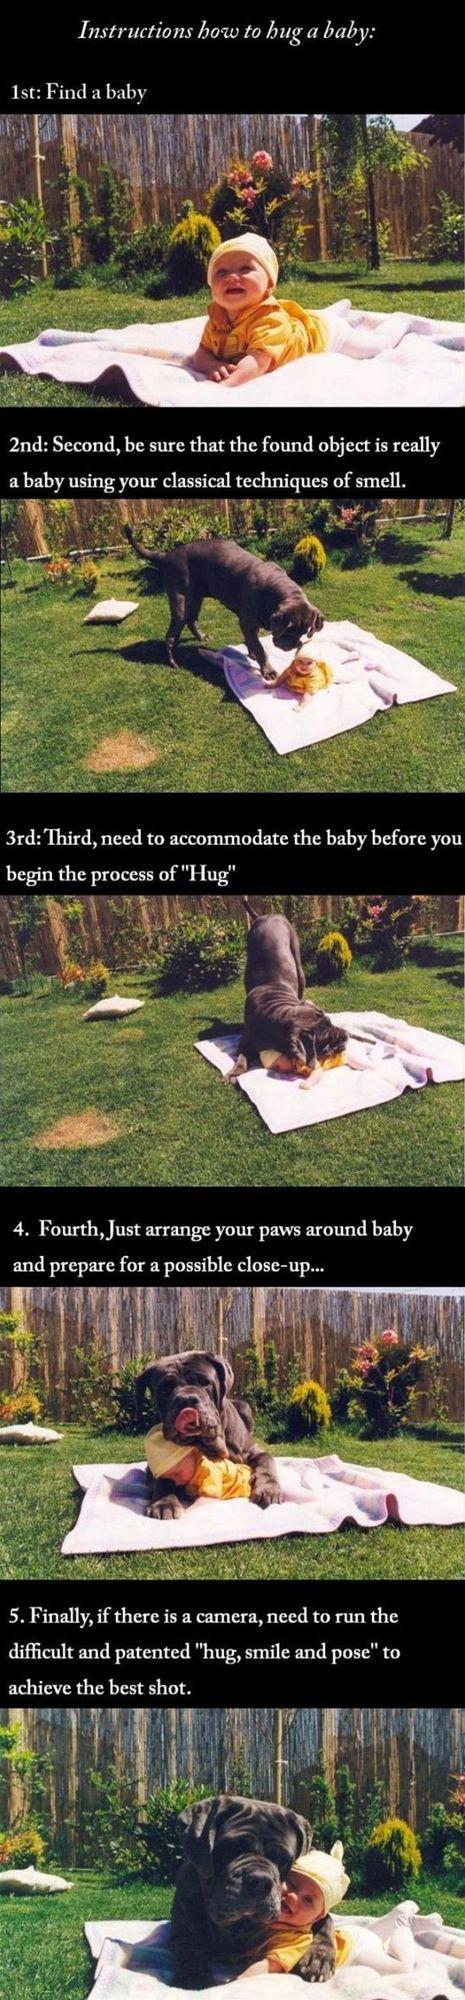 How to hug a baby